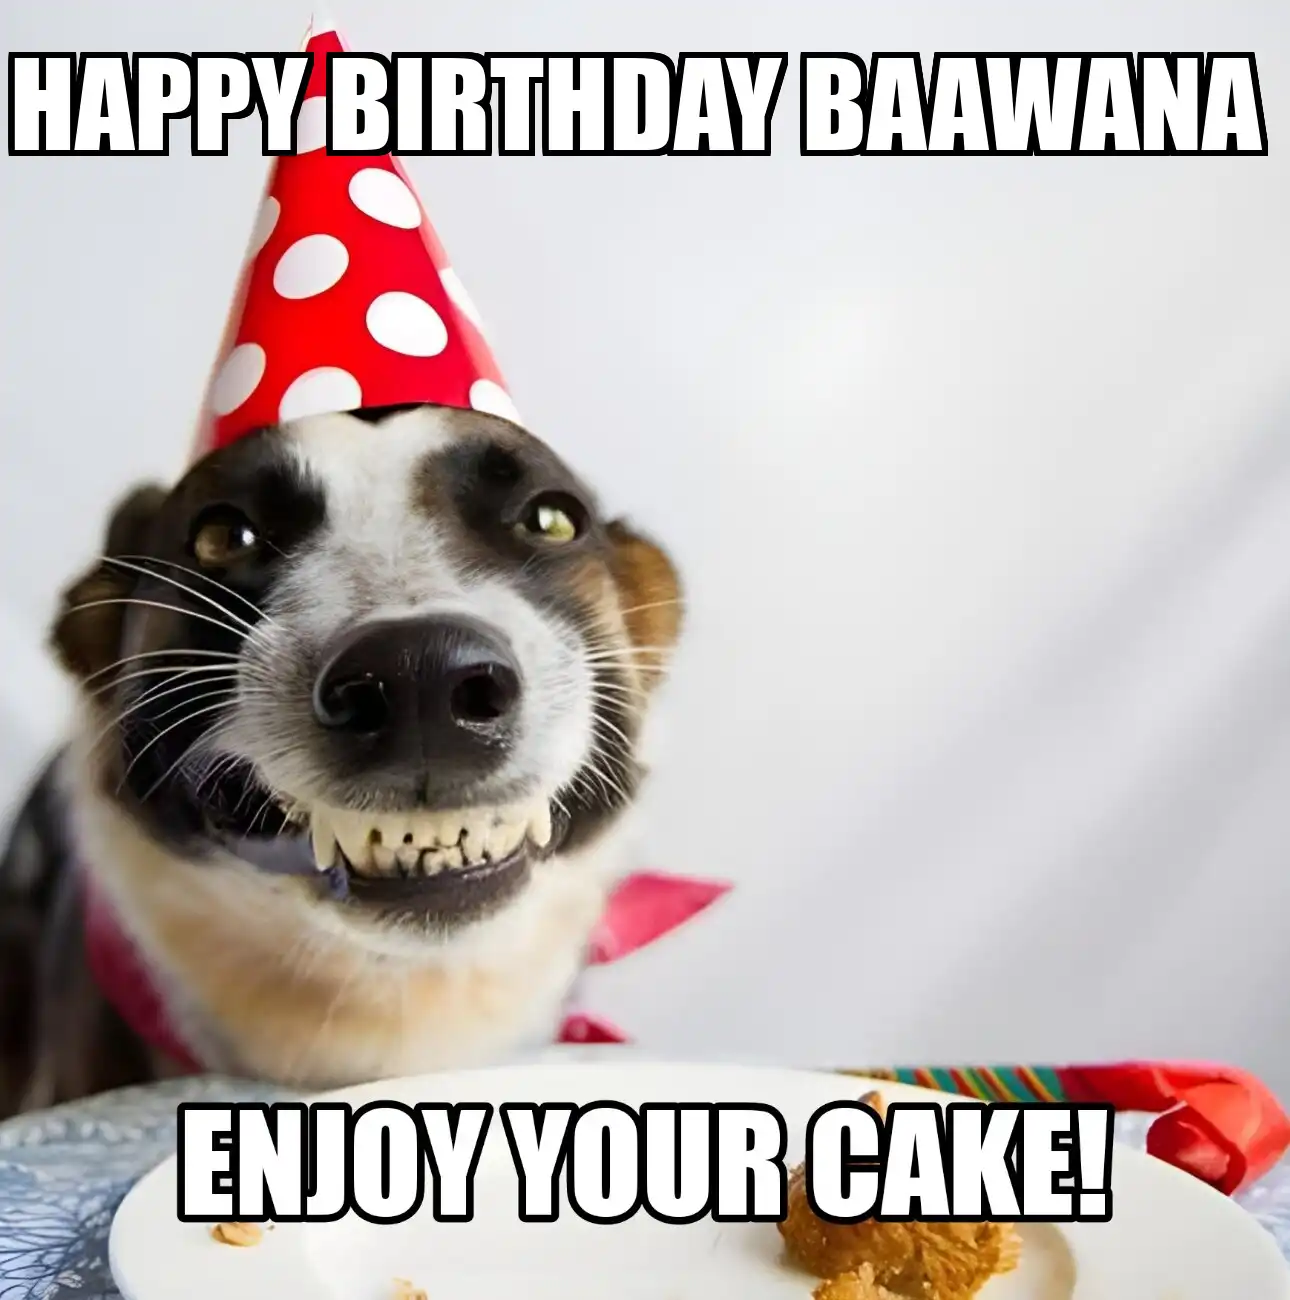 Happy Birthday Baawana Enjoy Your Cake Dog Meme